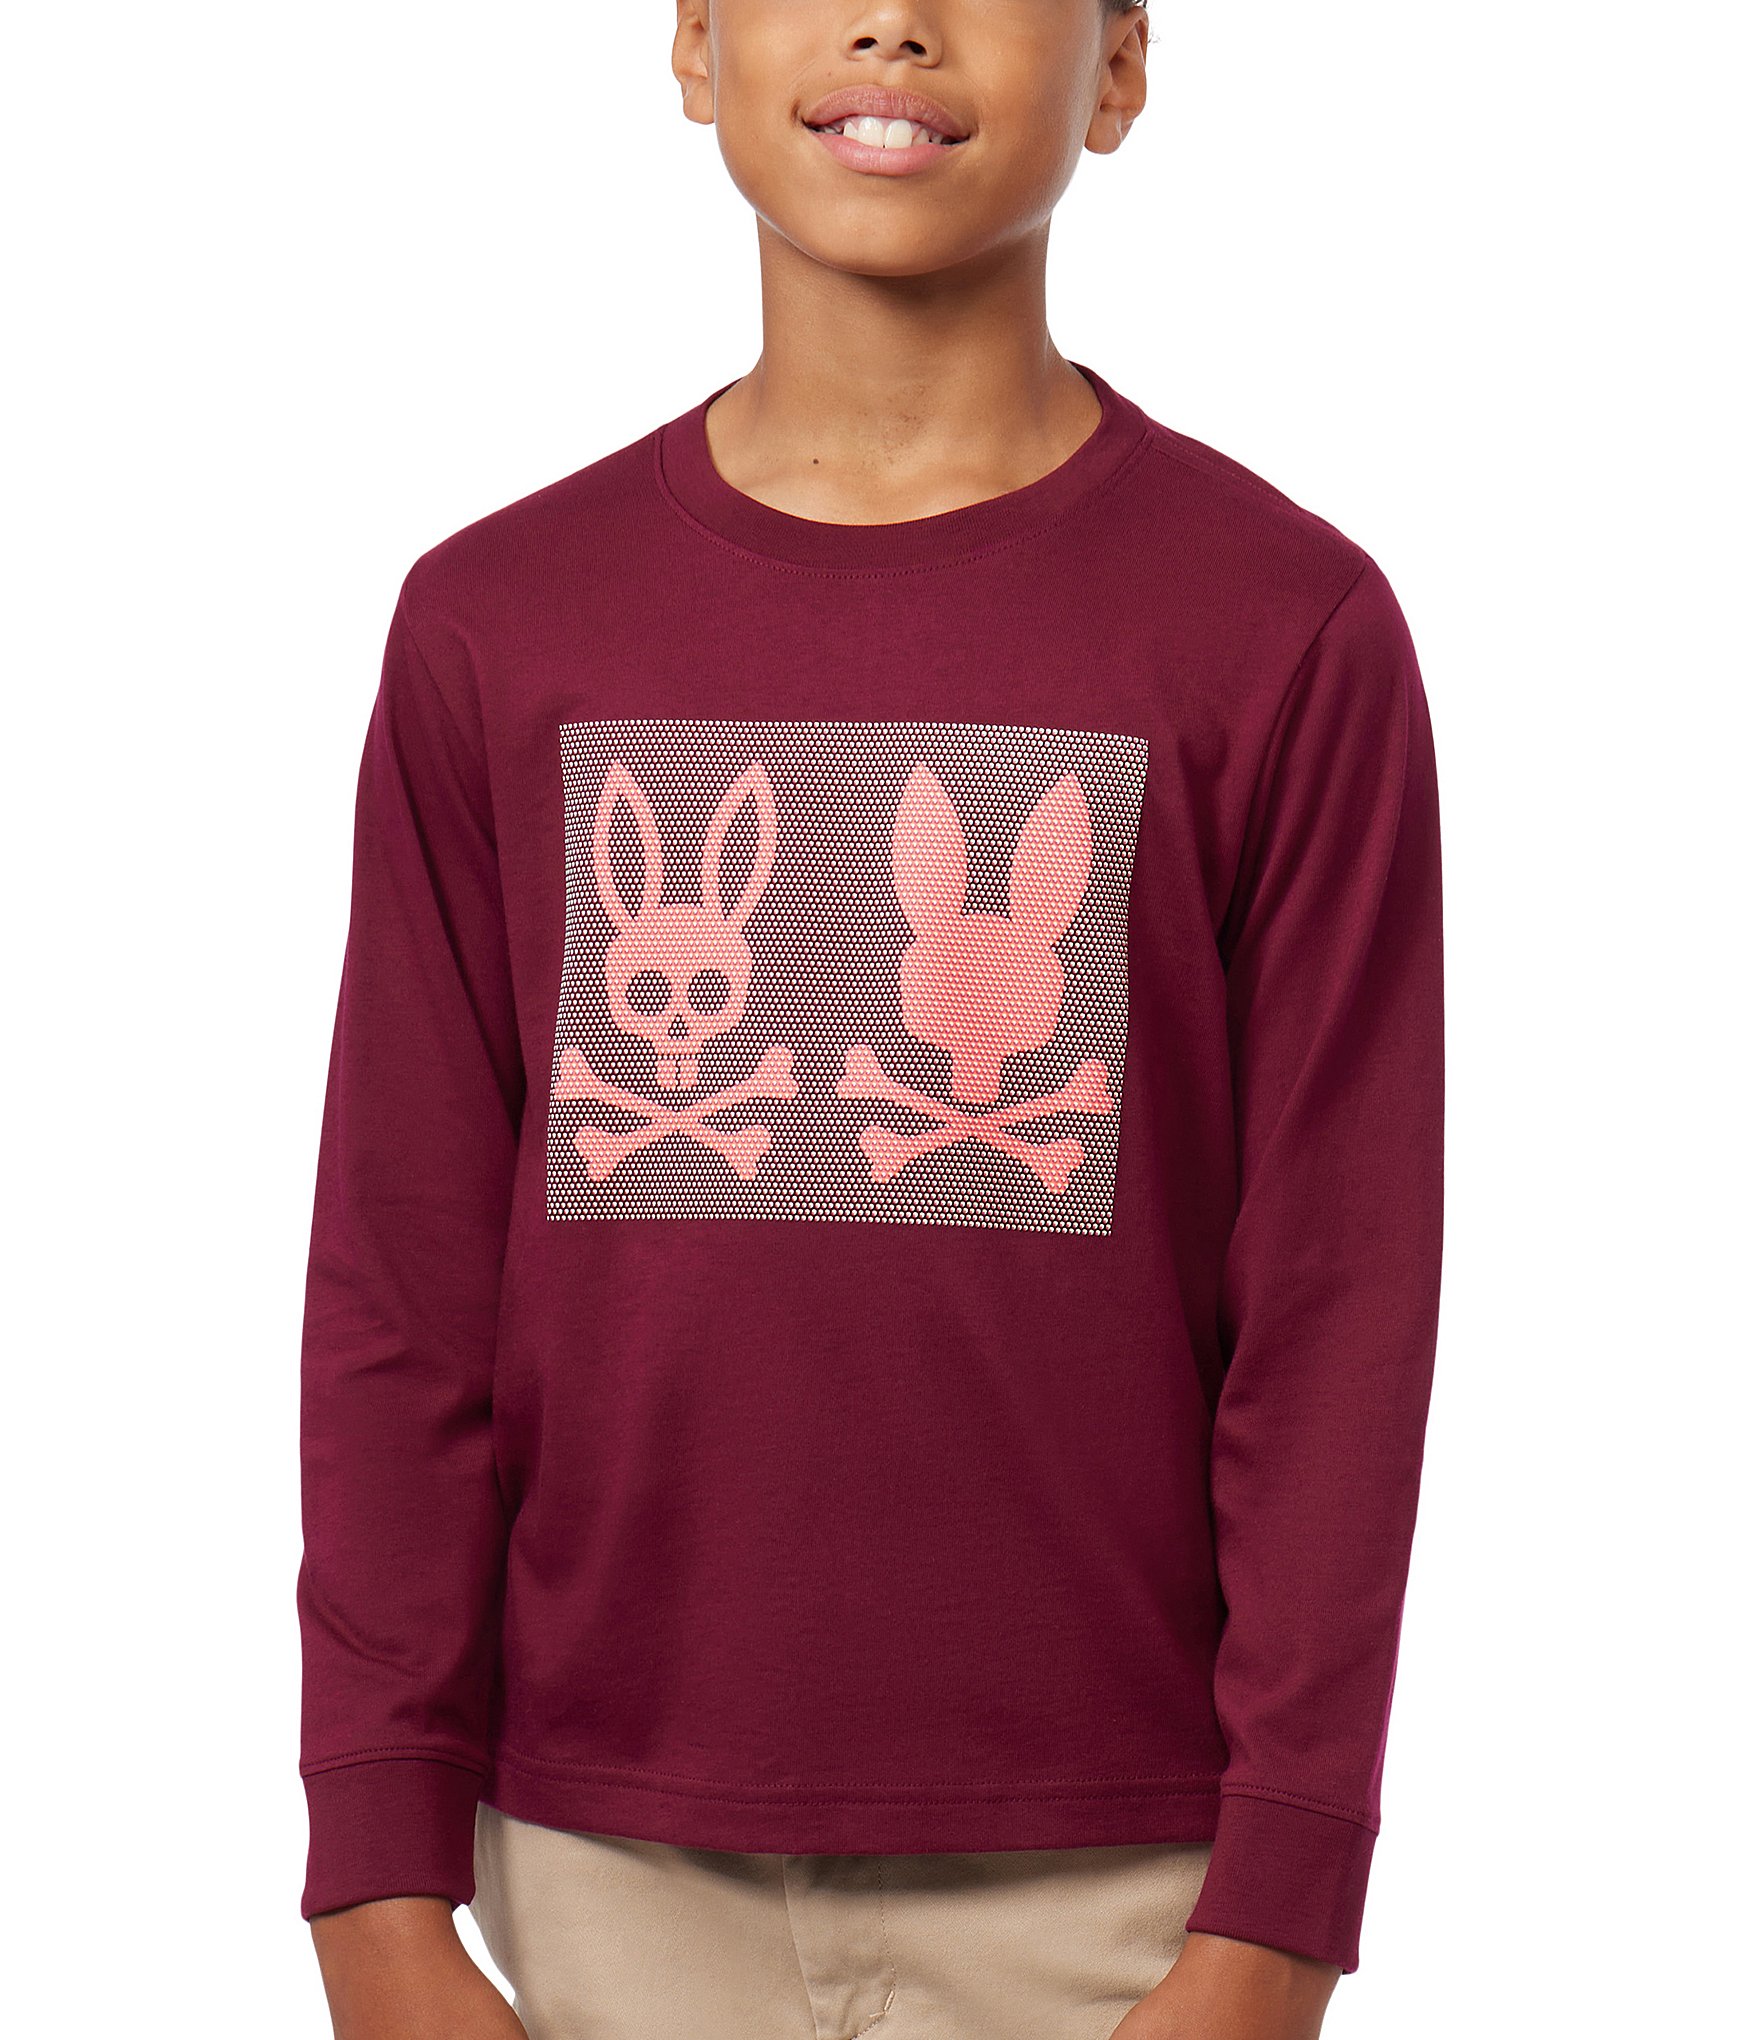 Boys - 3BRAND Inspire Hooded Sweatshirt - Boy's Sweatshirts in